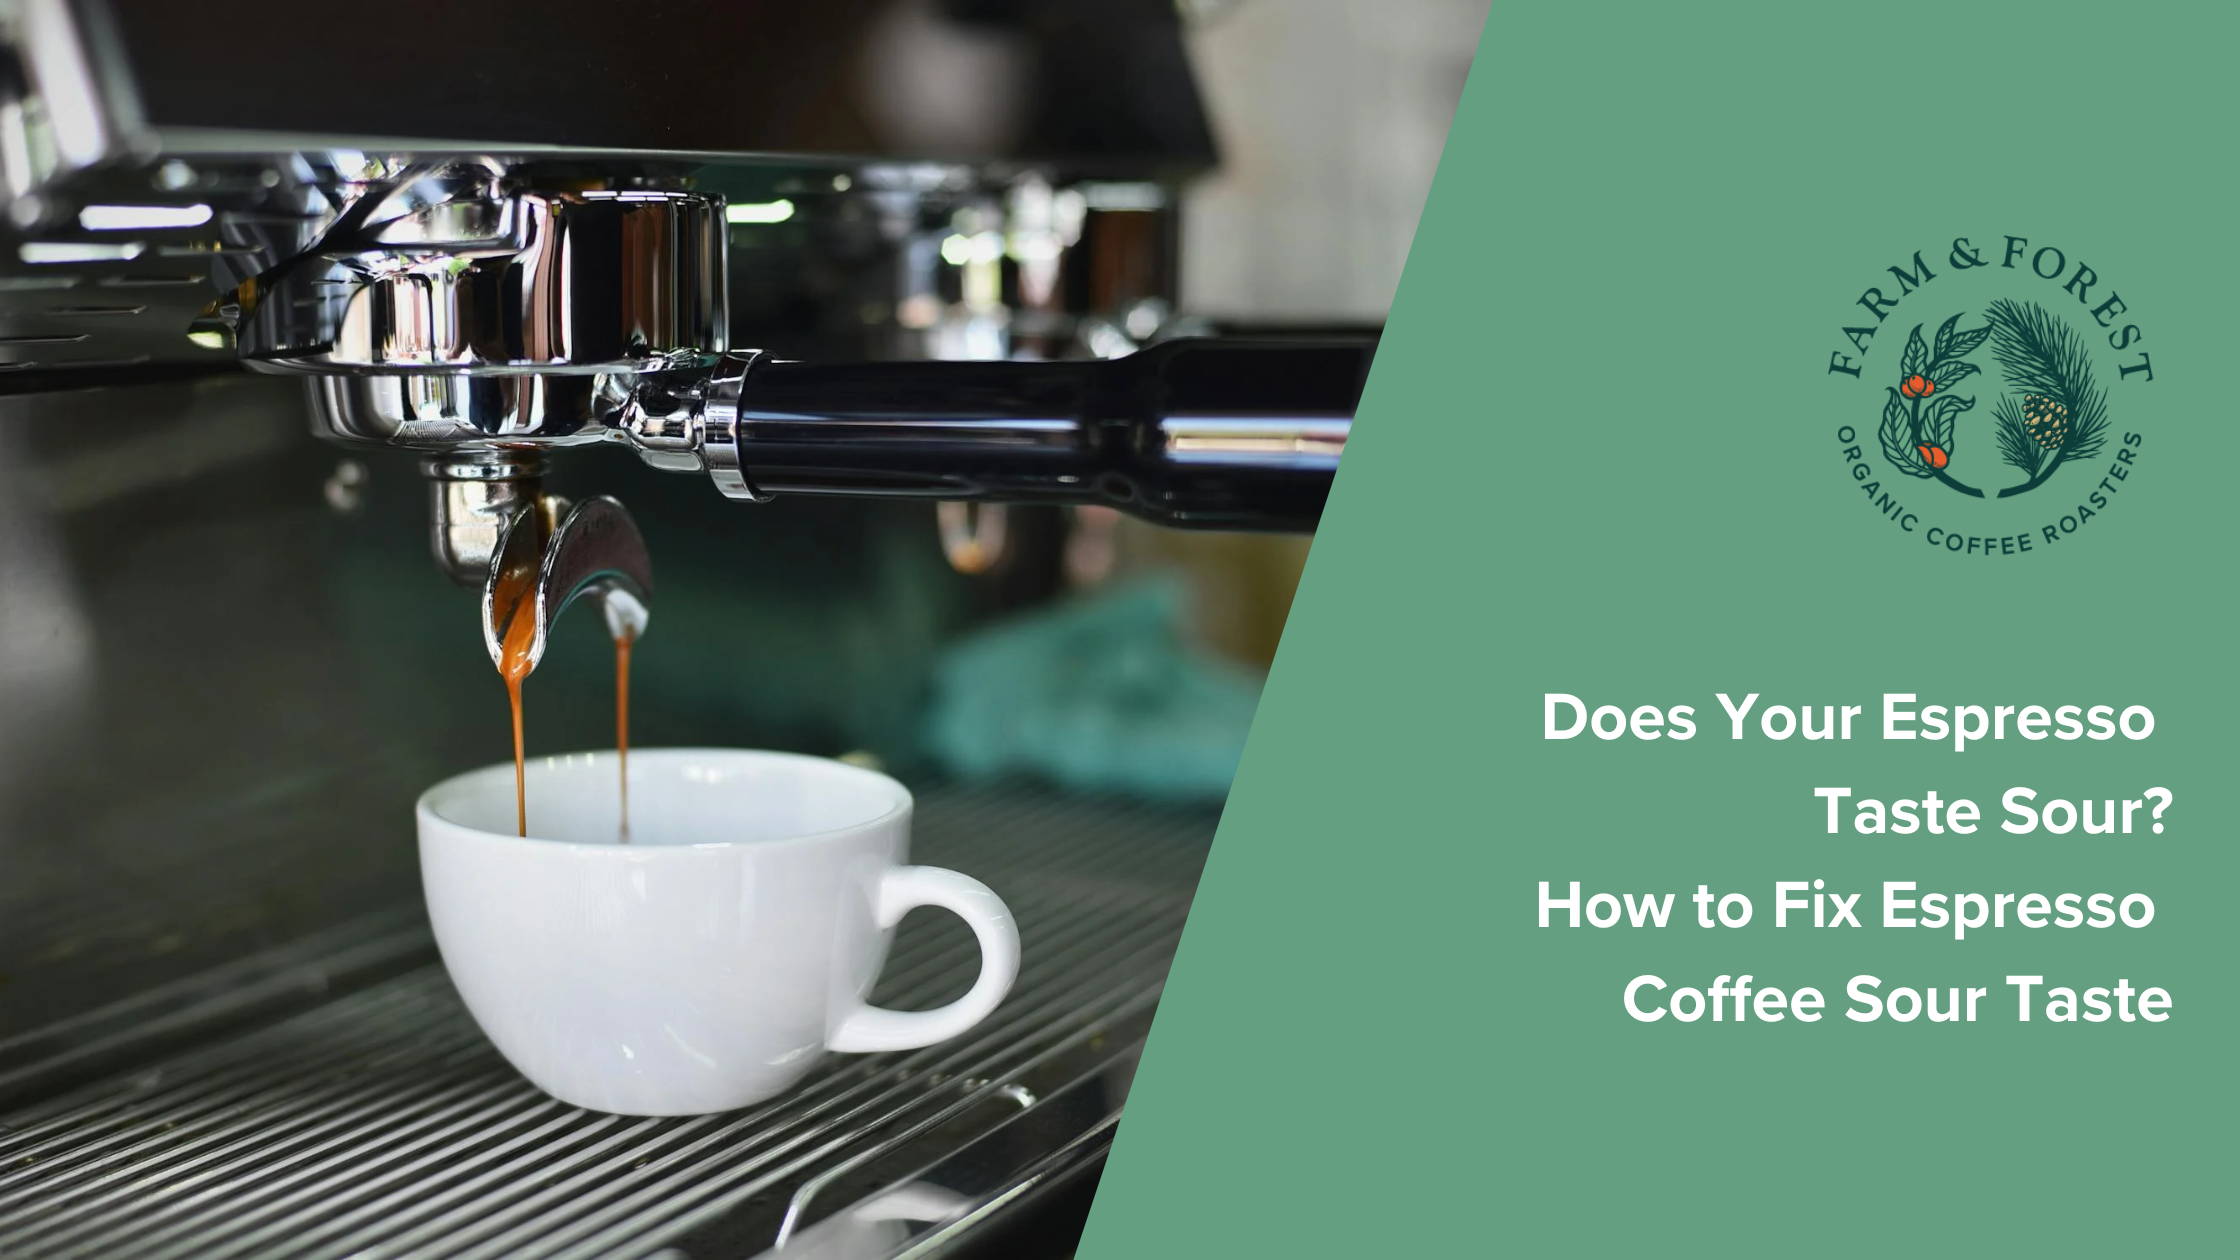 Does Your Espresso Taste Sour? How to Fix Espresso Coffee Sour Taste